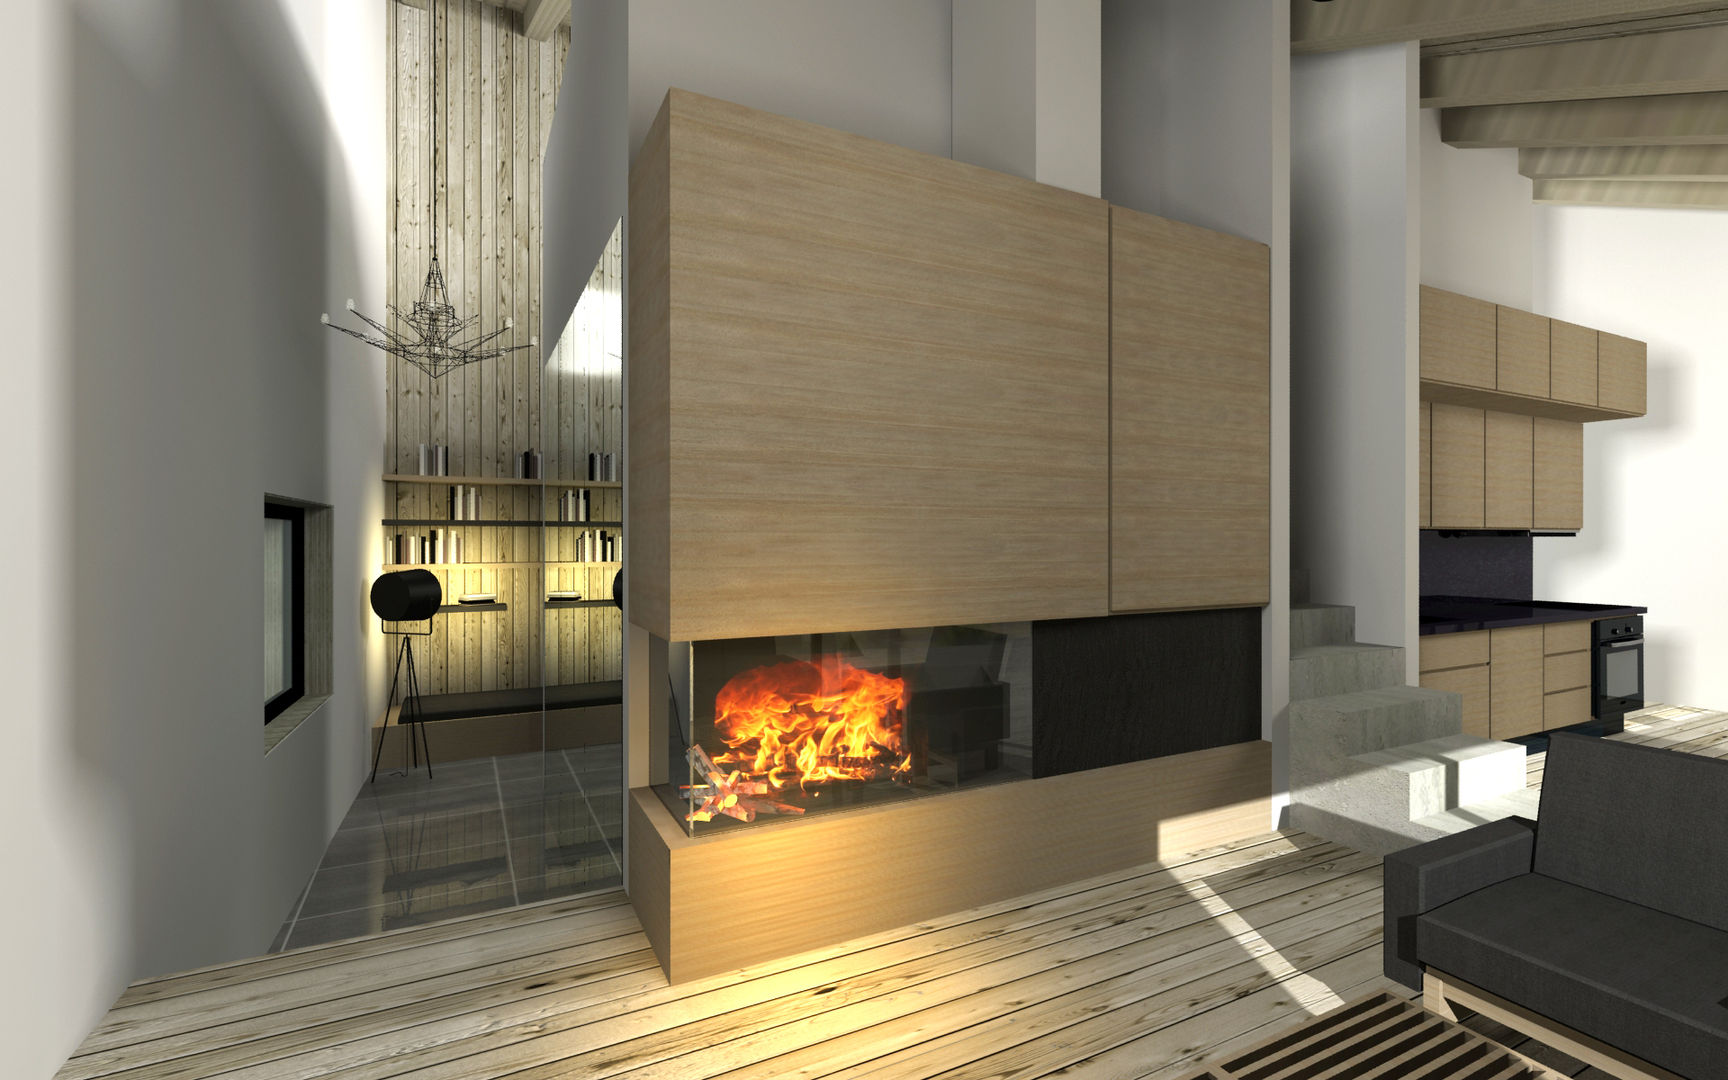 Dom letniskowy na skale, BIG IDEA studio projektowe BIG IDEA studio projektowe Living room Wood Wood effect